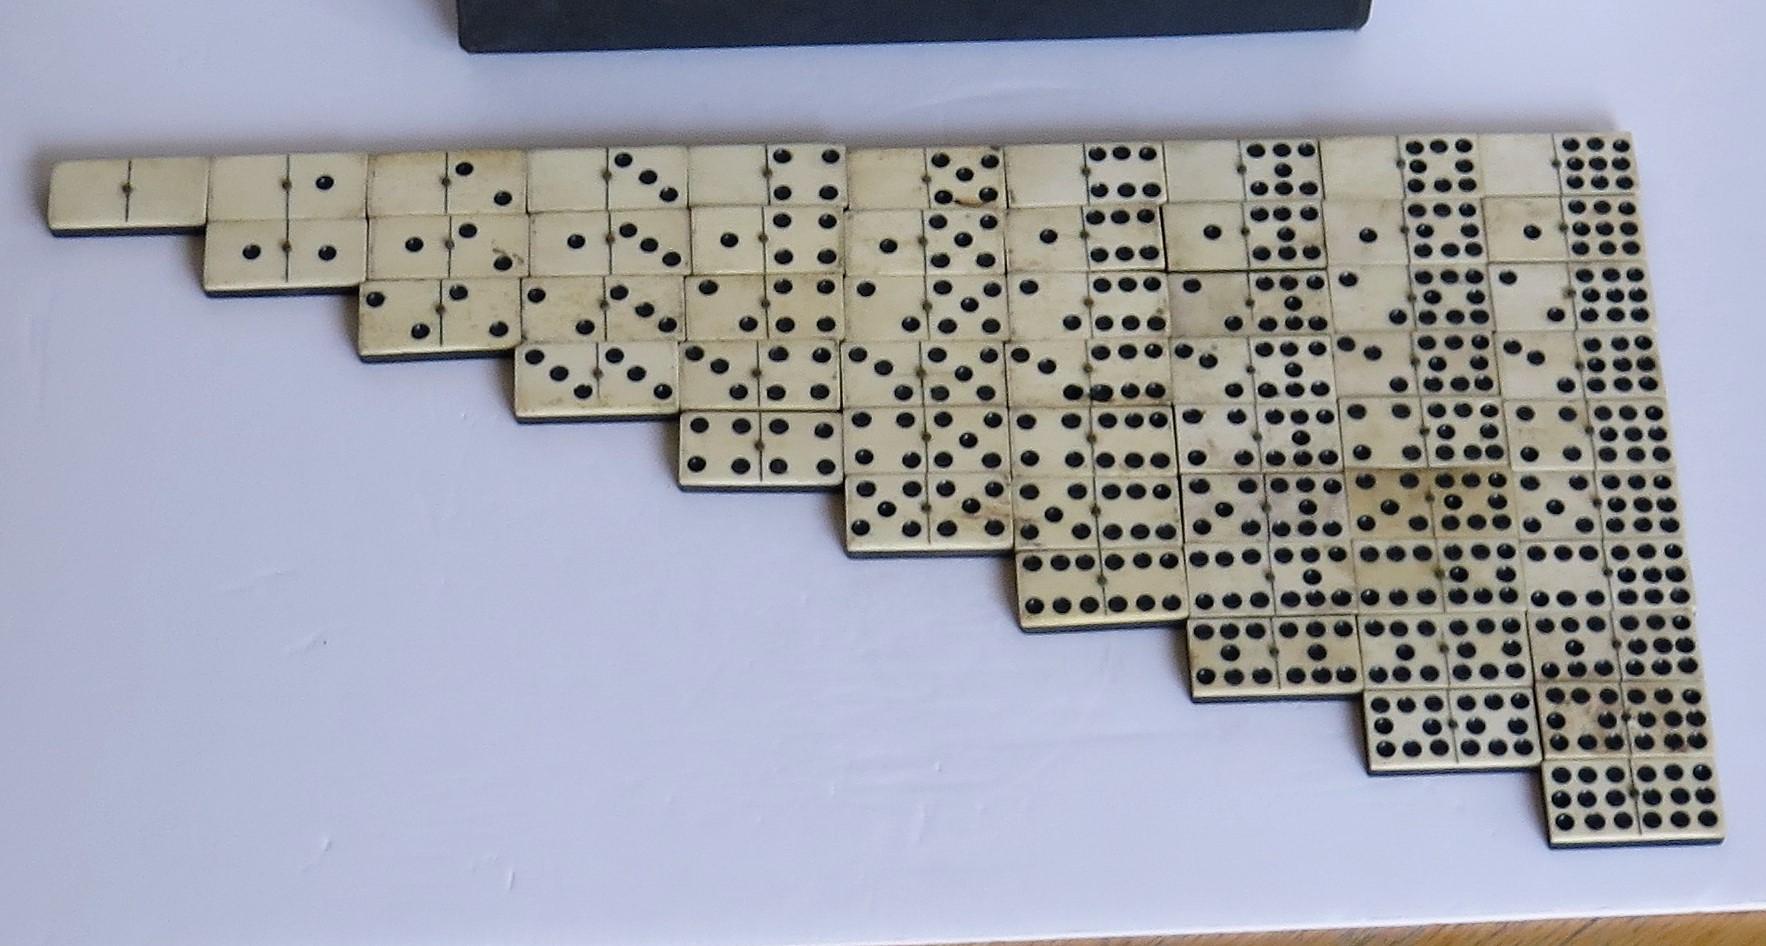 Wood Complete 9 Spot Dominoe Game of 55 Pieces in Original Box, circa 1900